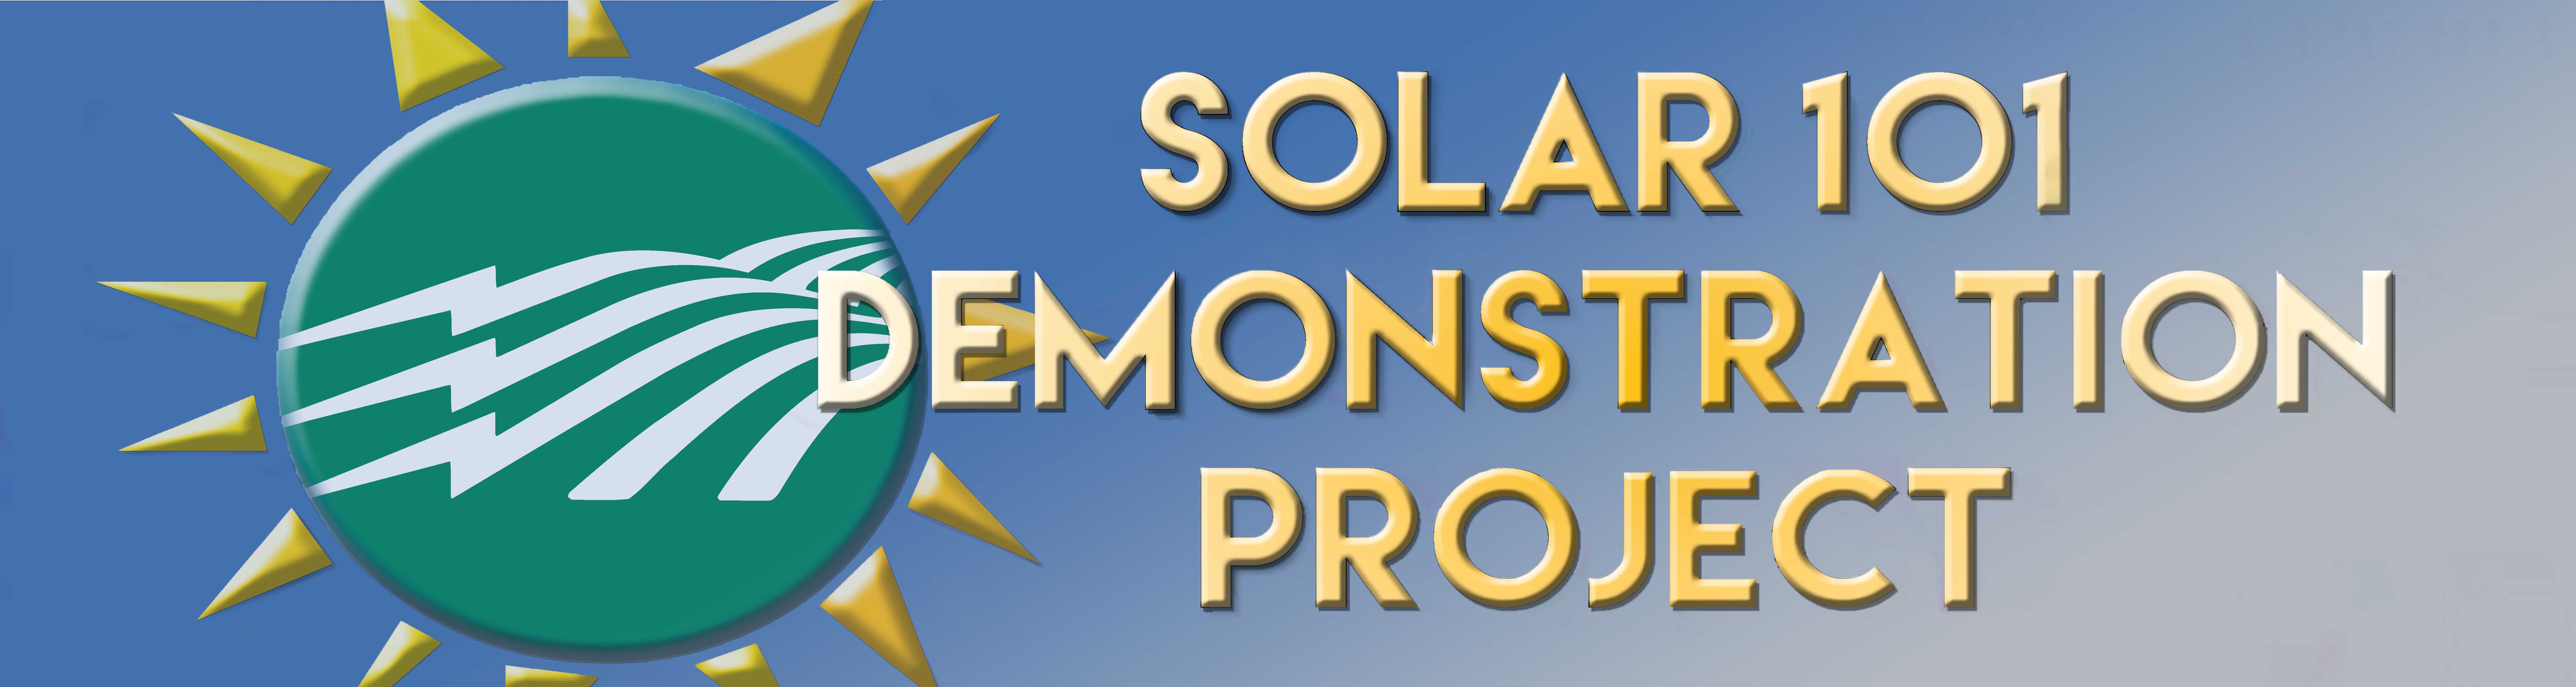 Solar 101 Demonstration Project logo